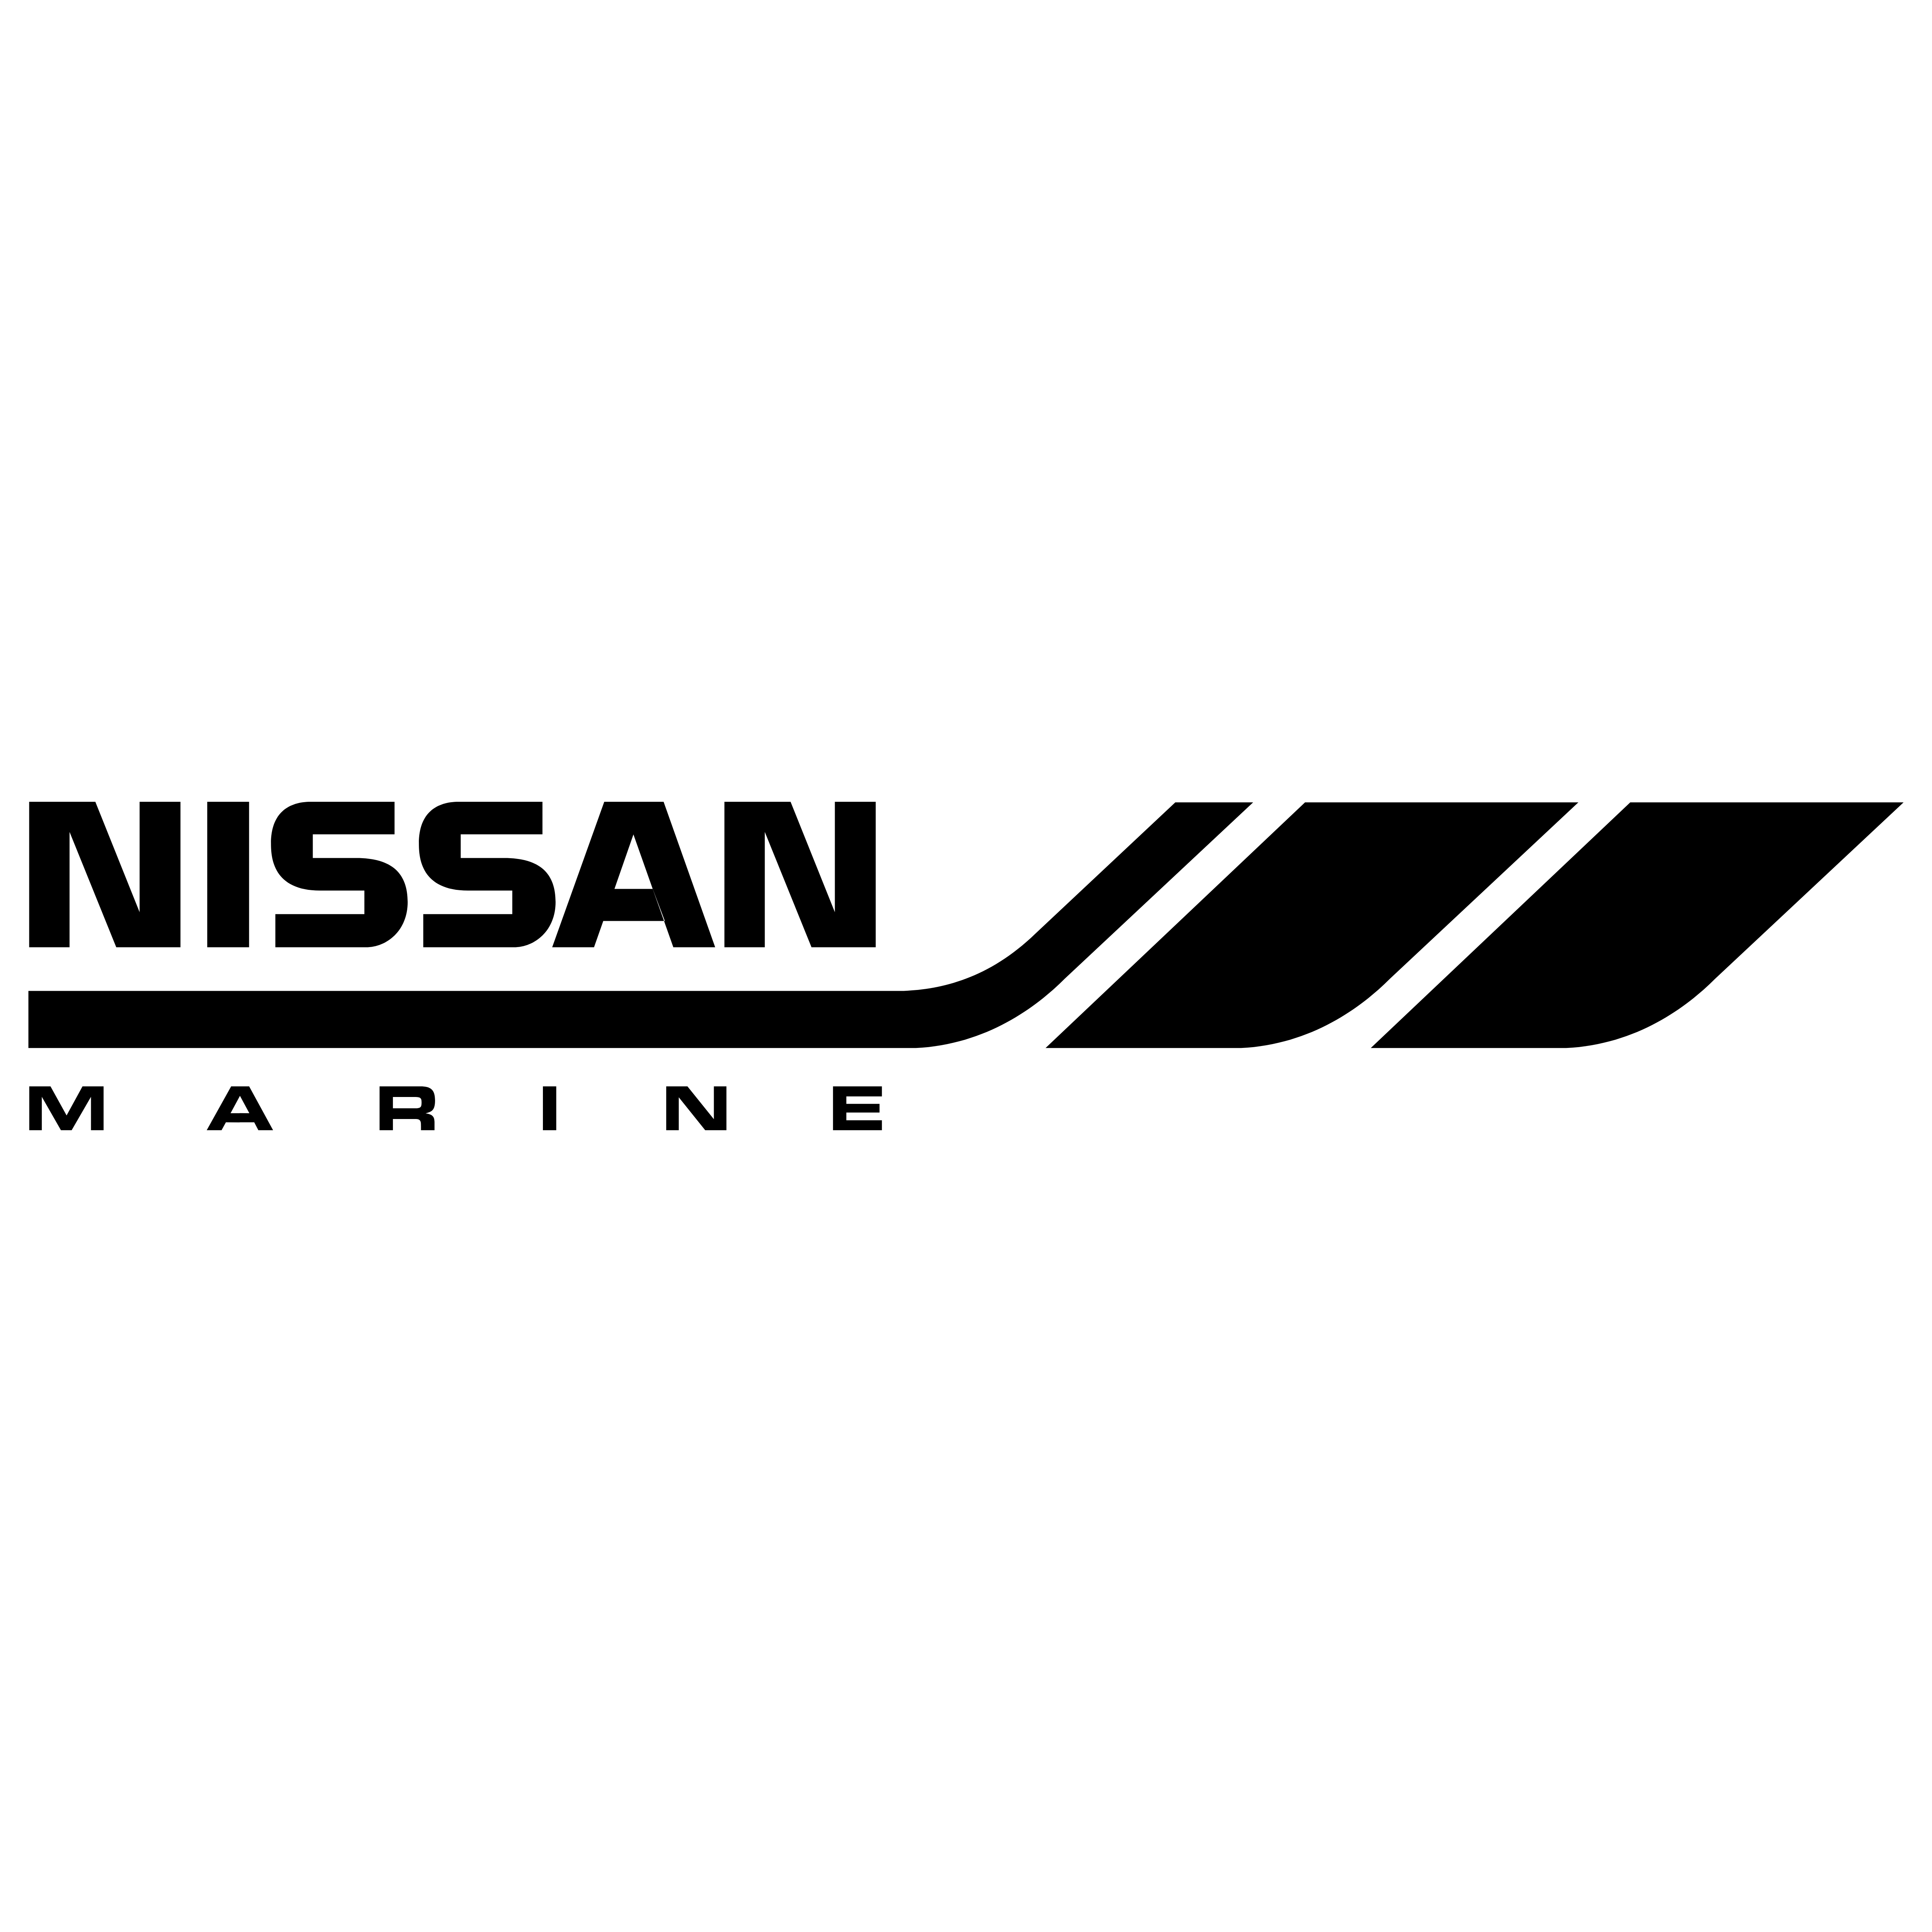 Nissan Vector Logo Download